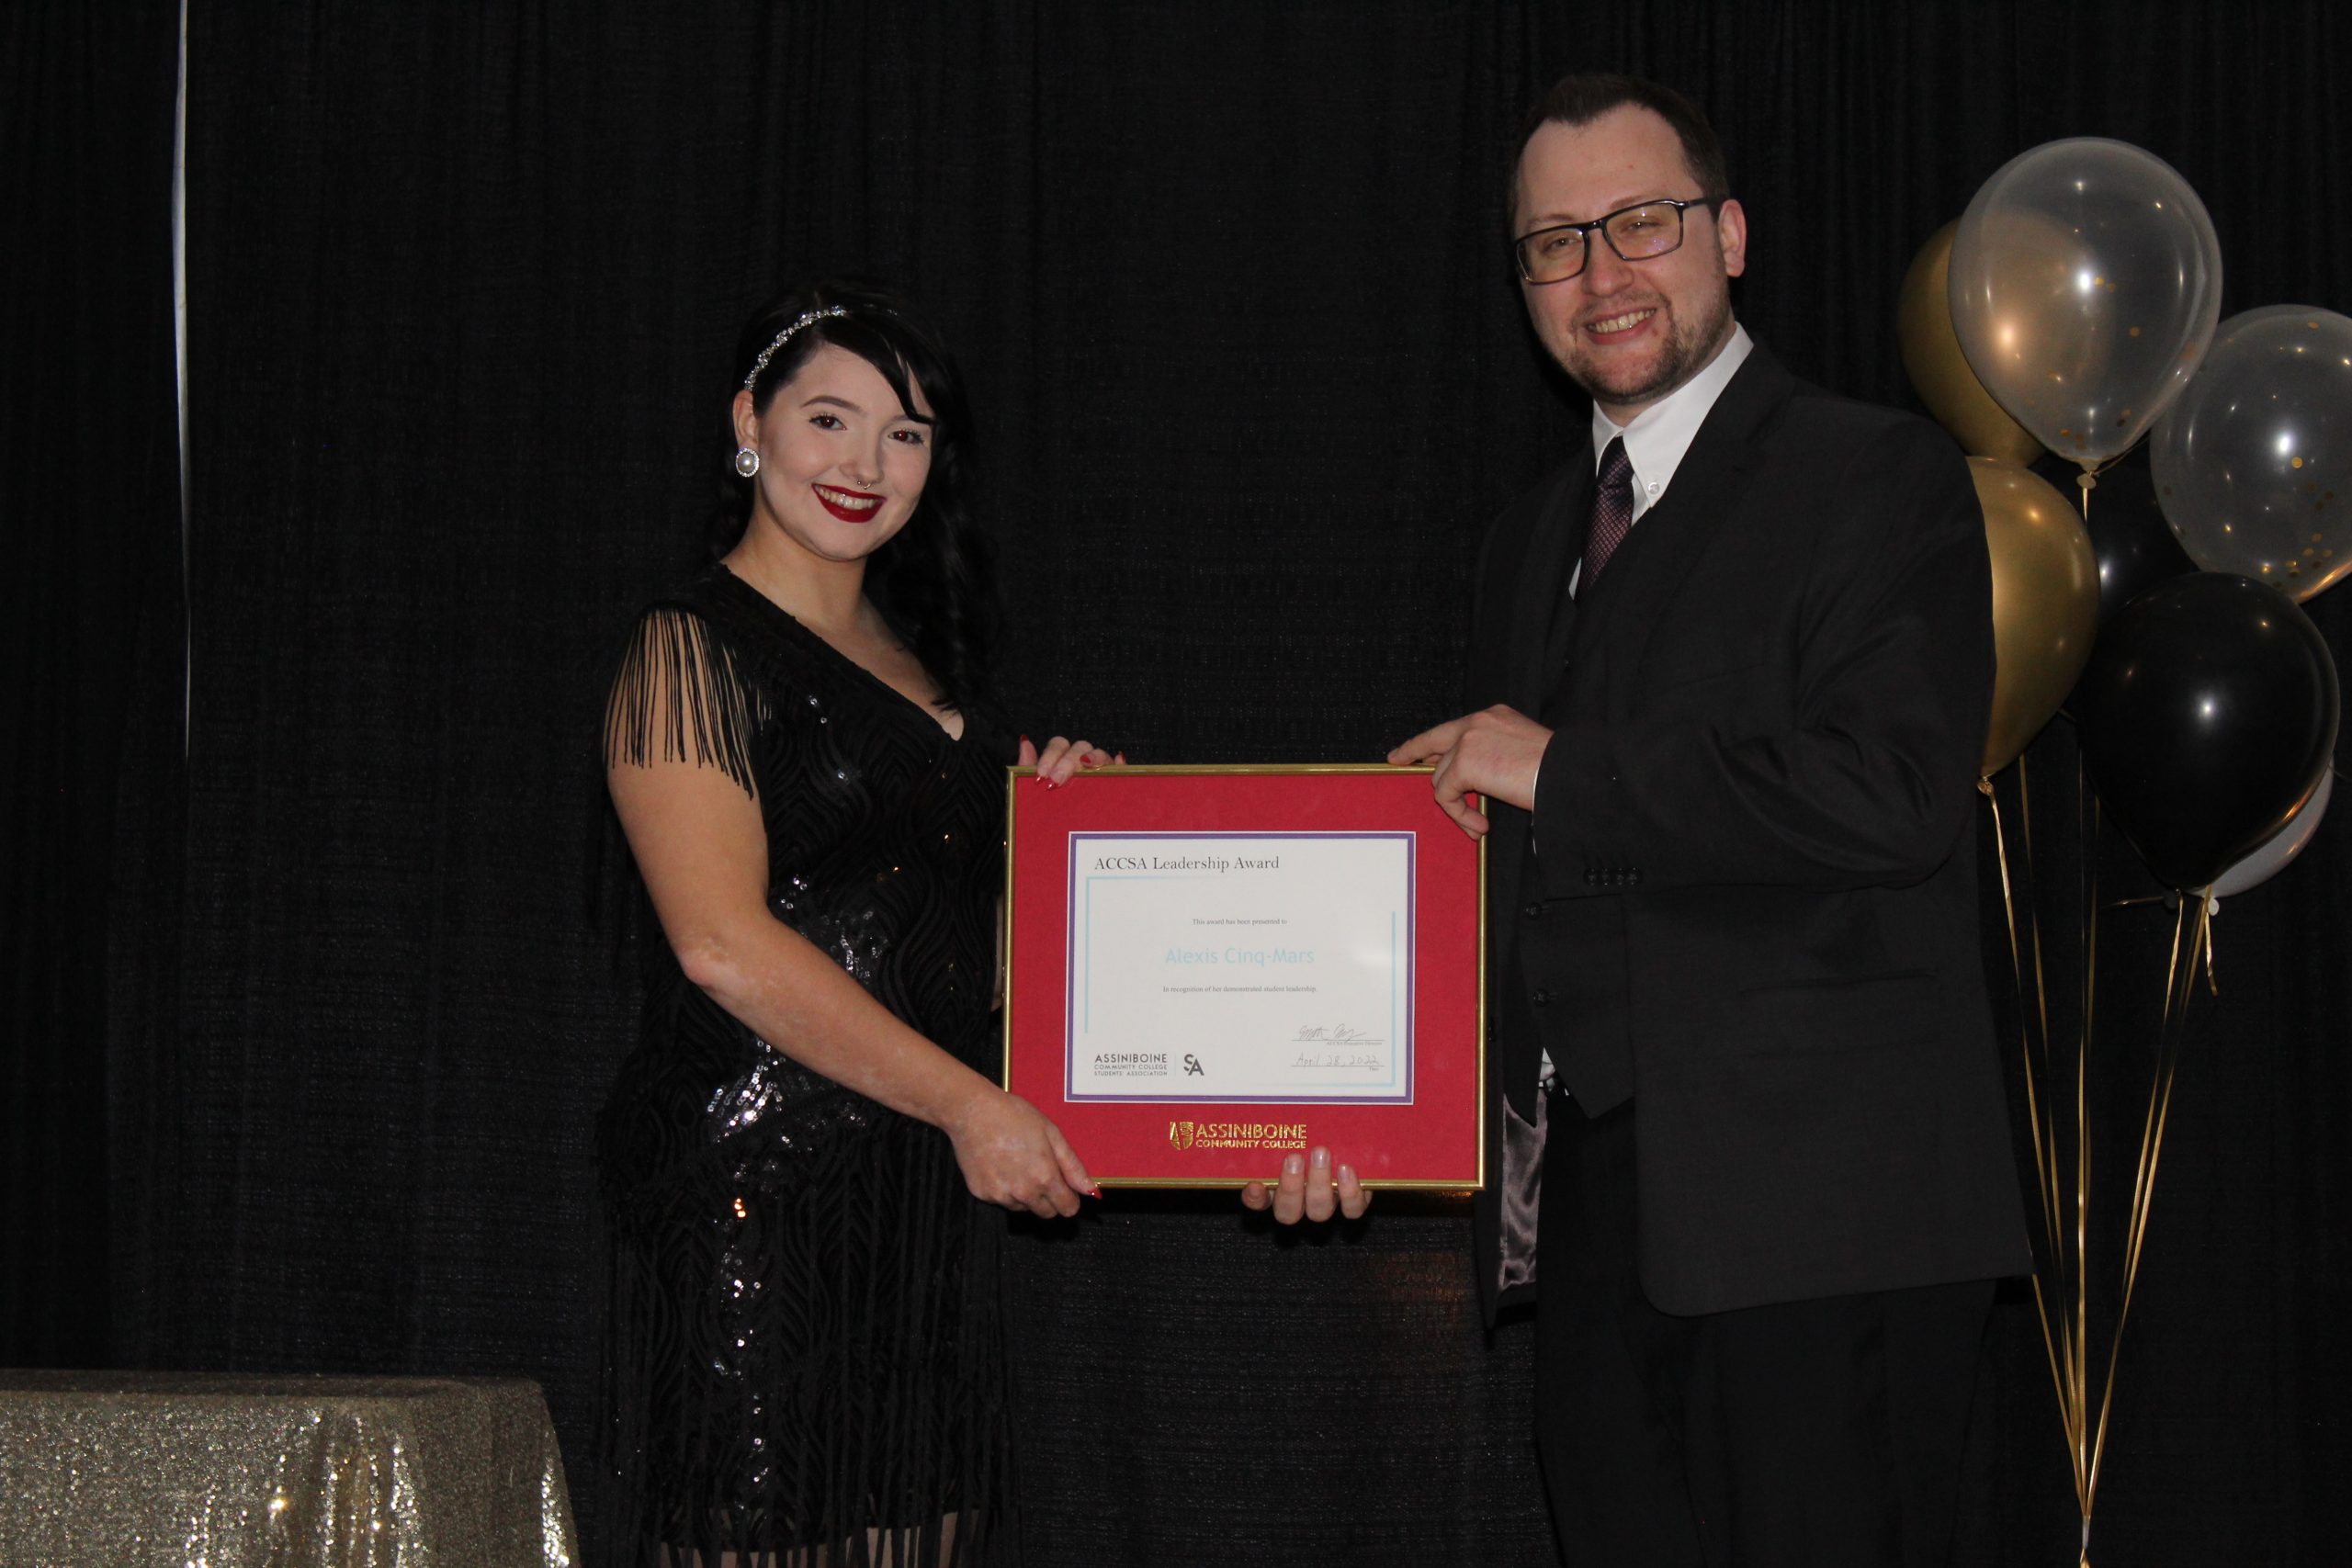 Alexis Cinq-Mars receives an ACCSA Leadership Award, presented by Matthew May, Executive Director, ACCSA 